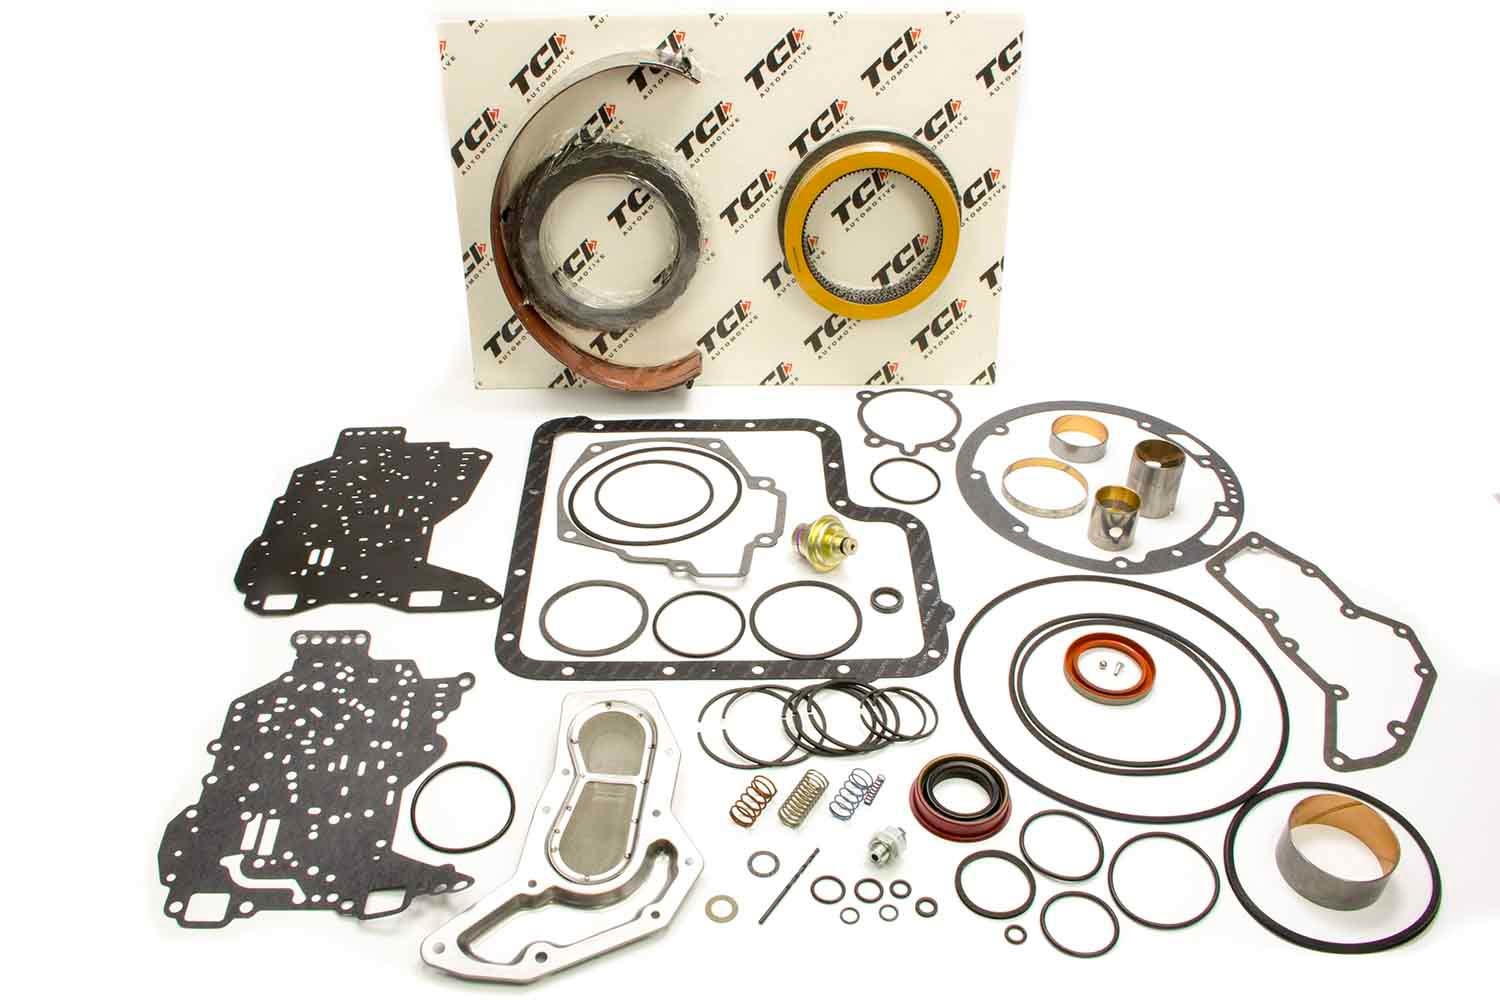 TCI 448900 Transmission Rebuild Kit, Automatic, Pro Super, Clutches / Bands / Filter / Gaskets / Seals, Modulator, Valve Body, C6, Kit